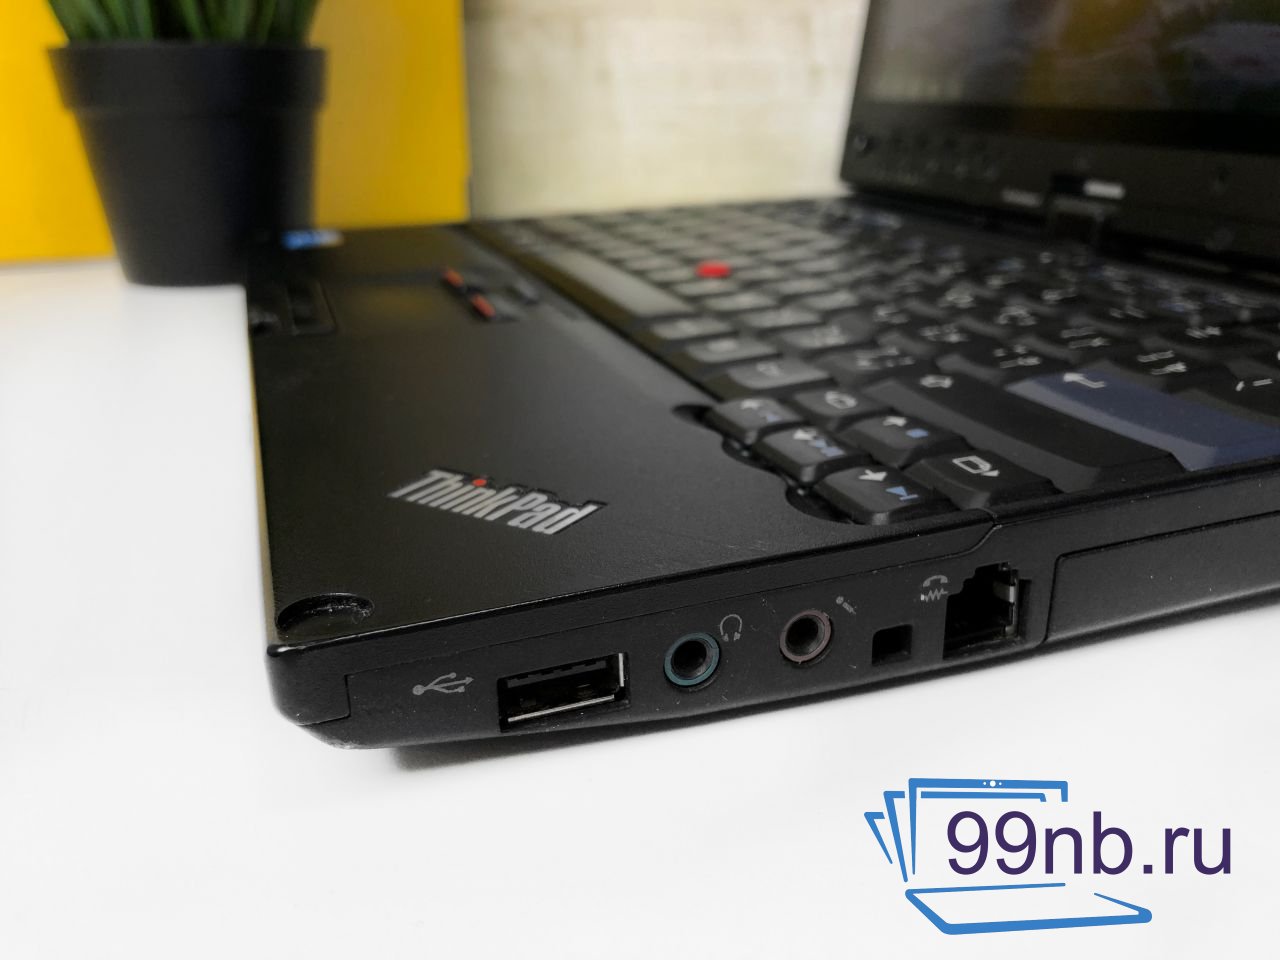  Компактный Lenovo ThinkPad для командировок (i5)